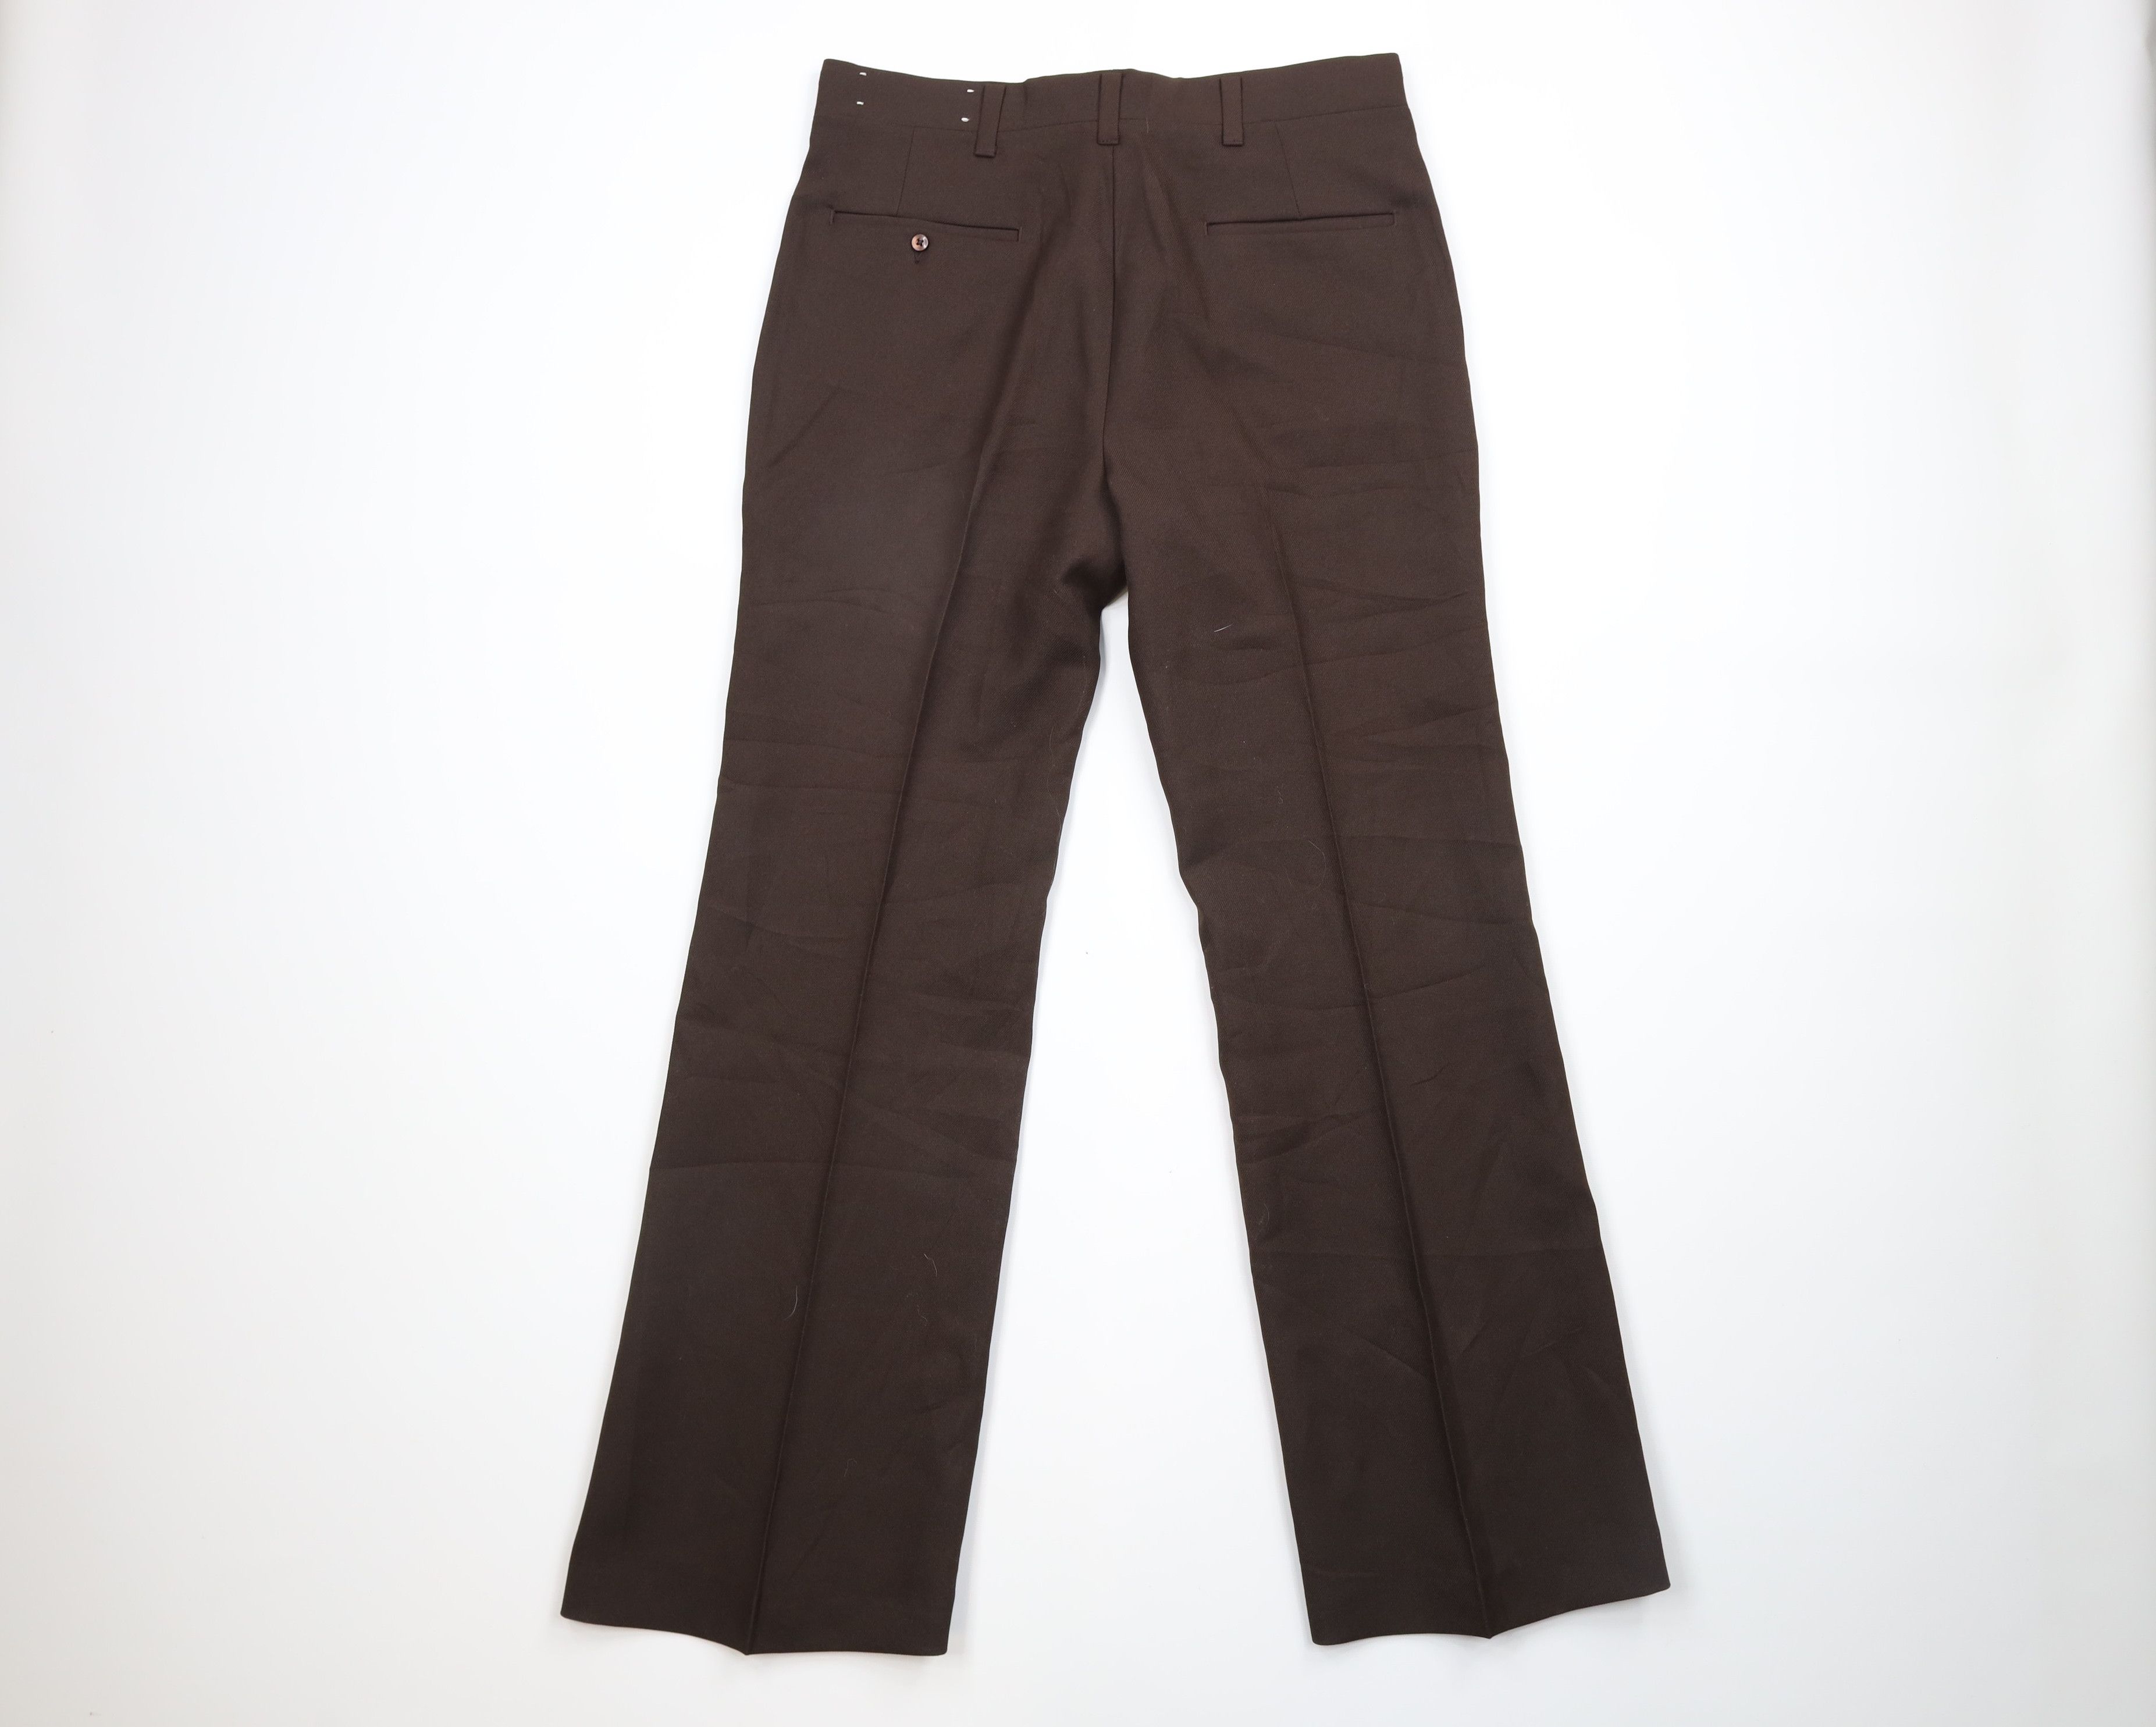 Vintage Vintage 70s Streetwear Knit Flared Bell Bottoms Pants Brown Size US 32 / EU 48 - 7 Thumbnail